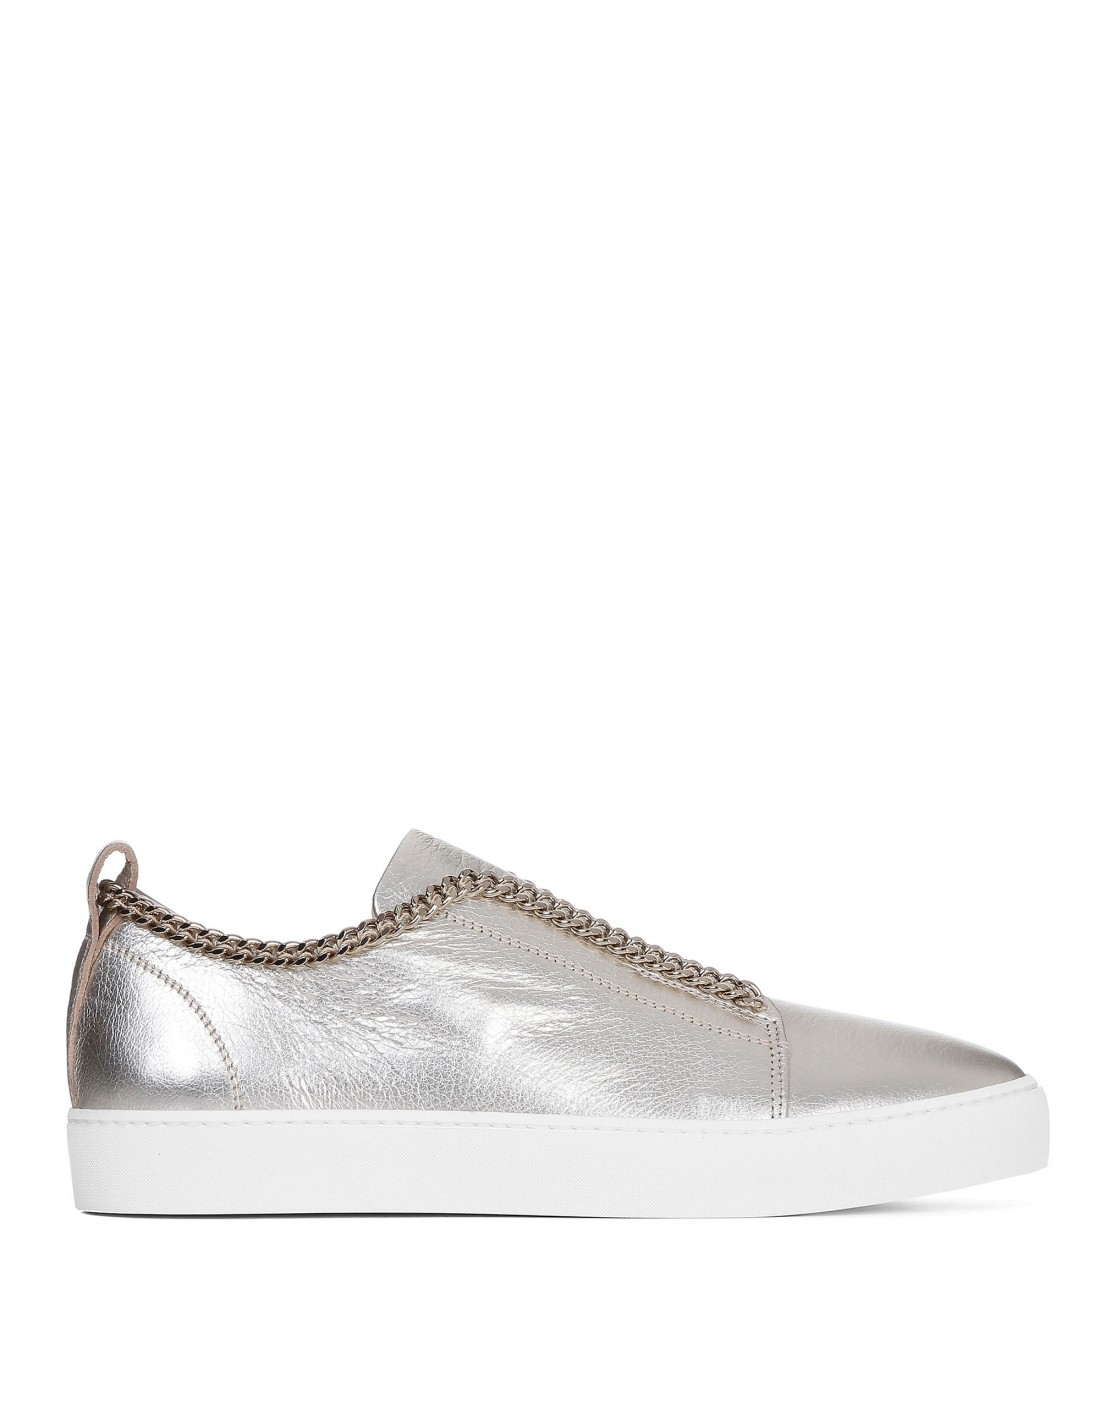 Leather Shoes in Silver Chain - Stokton - altamoda.shop